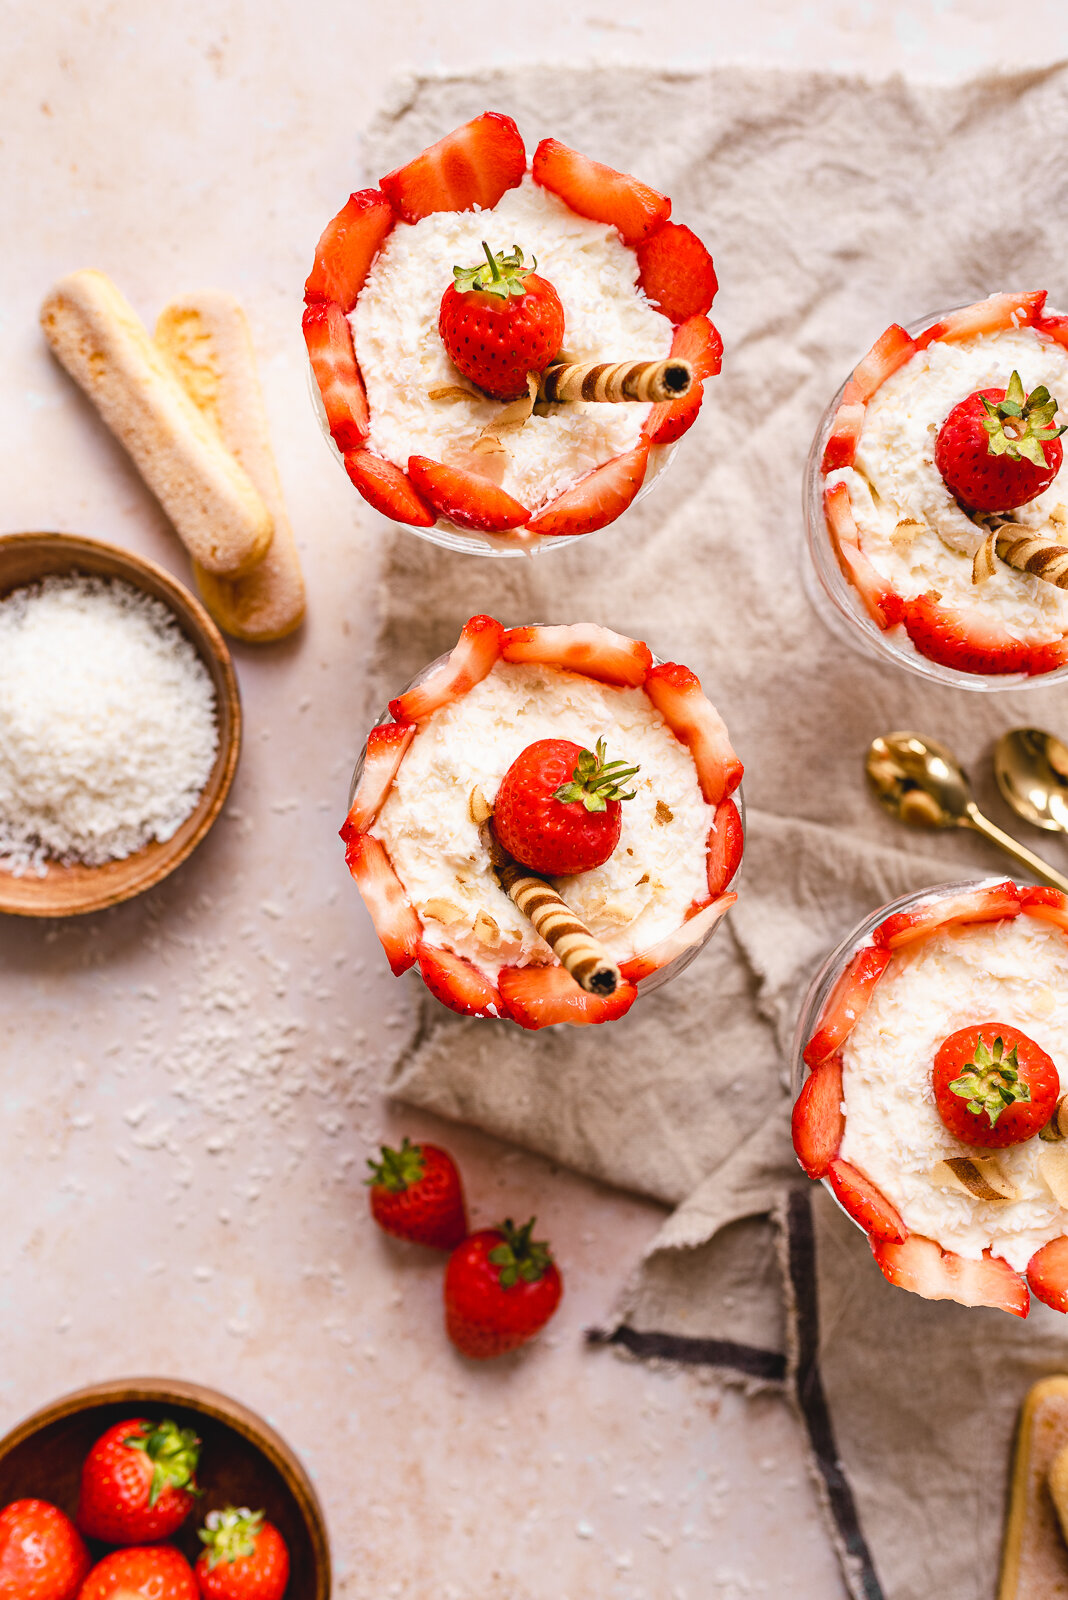 A perfect summer dessert recipe using in season fruit - Strawberry and Coconut Rum Tiramisu